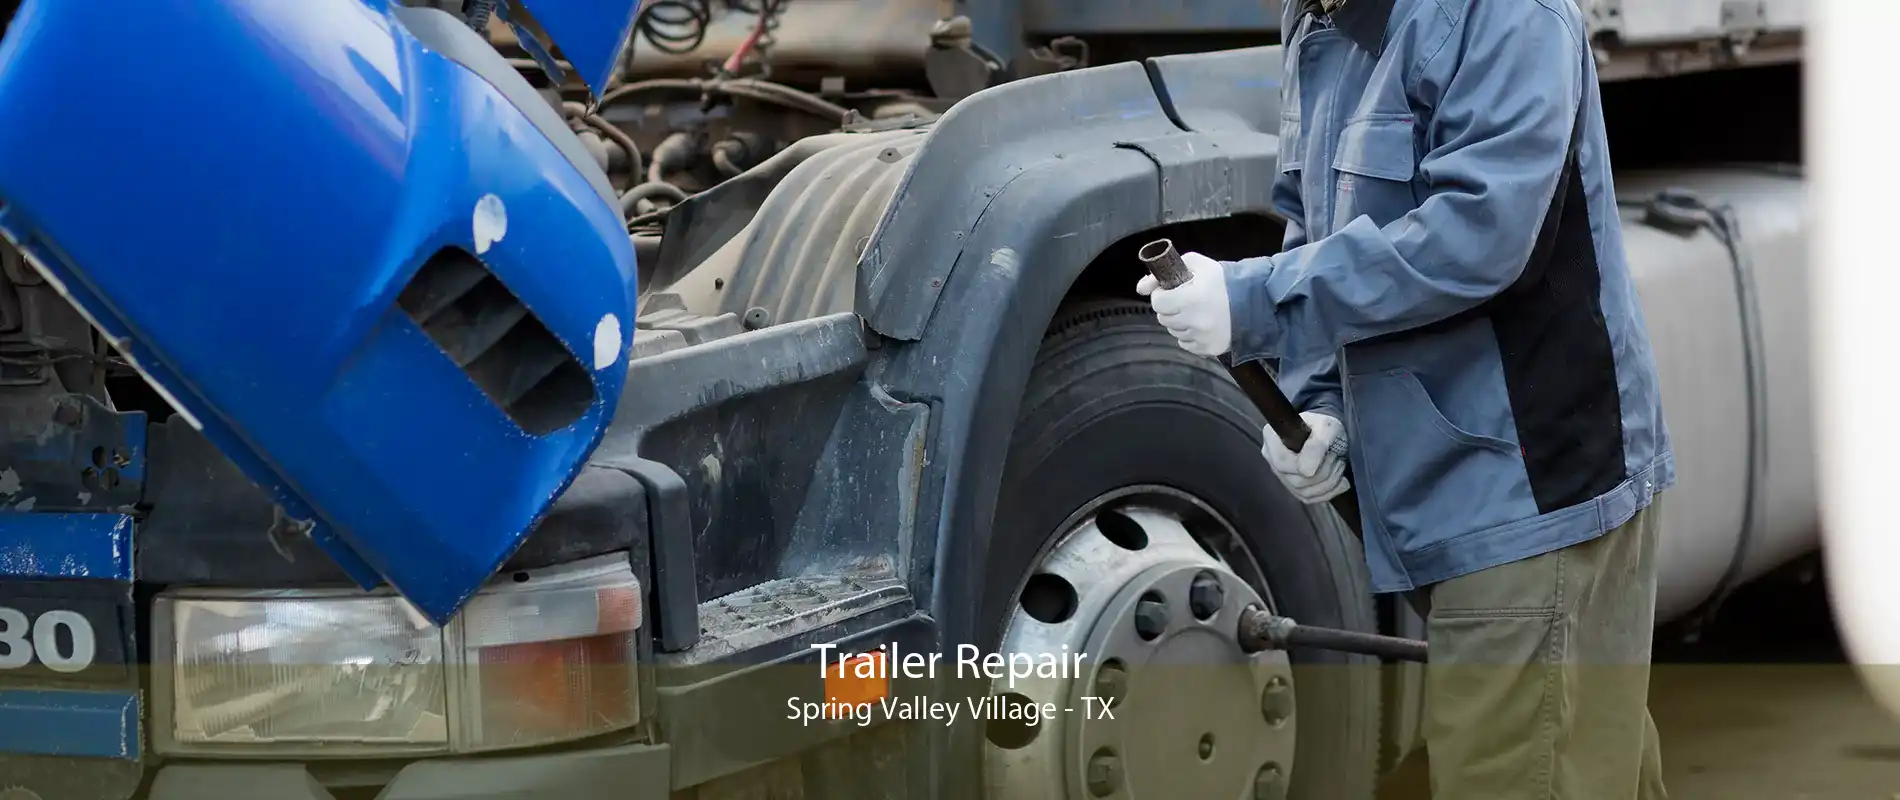 Trailer Repair Spring Valley Village - TX